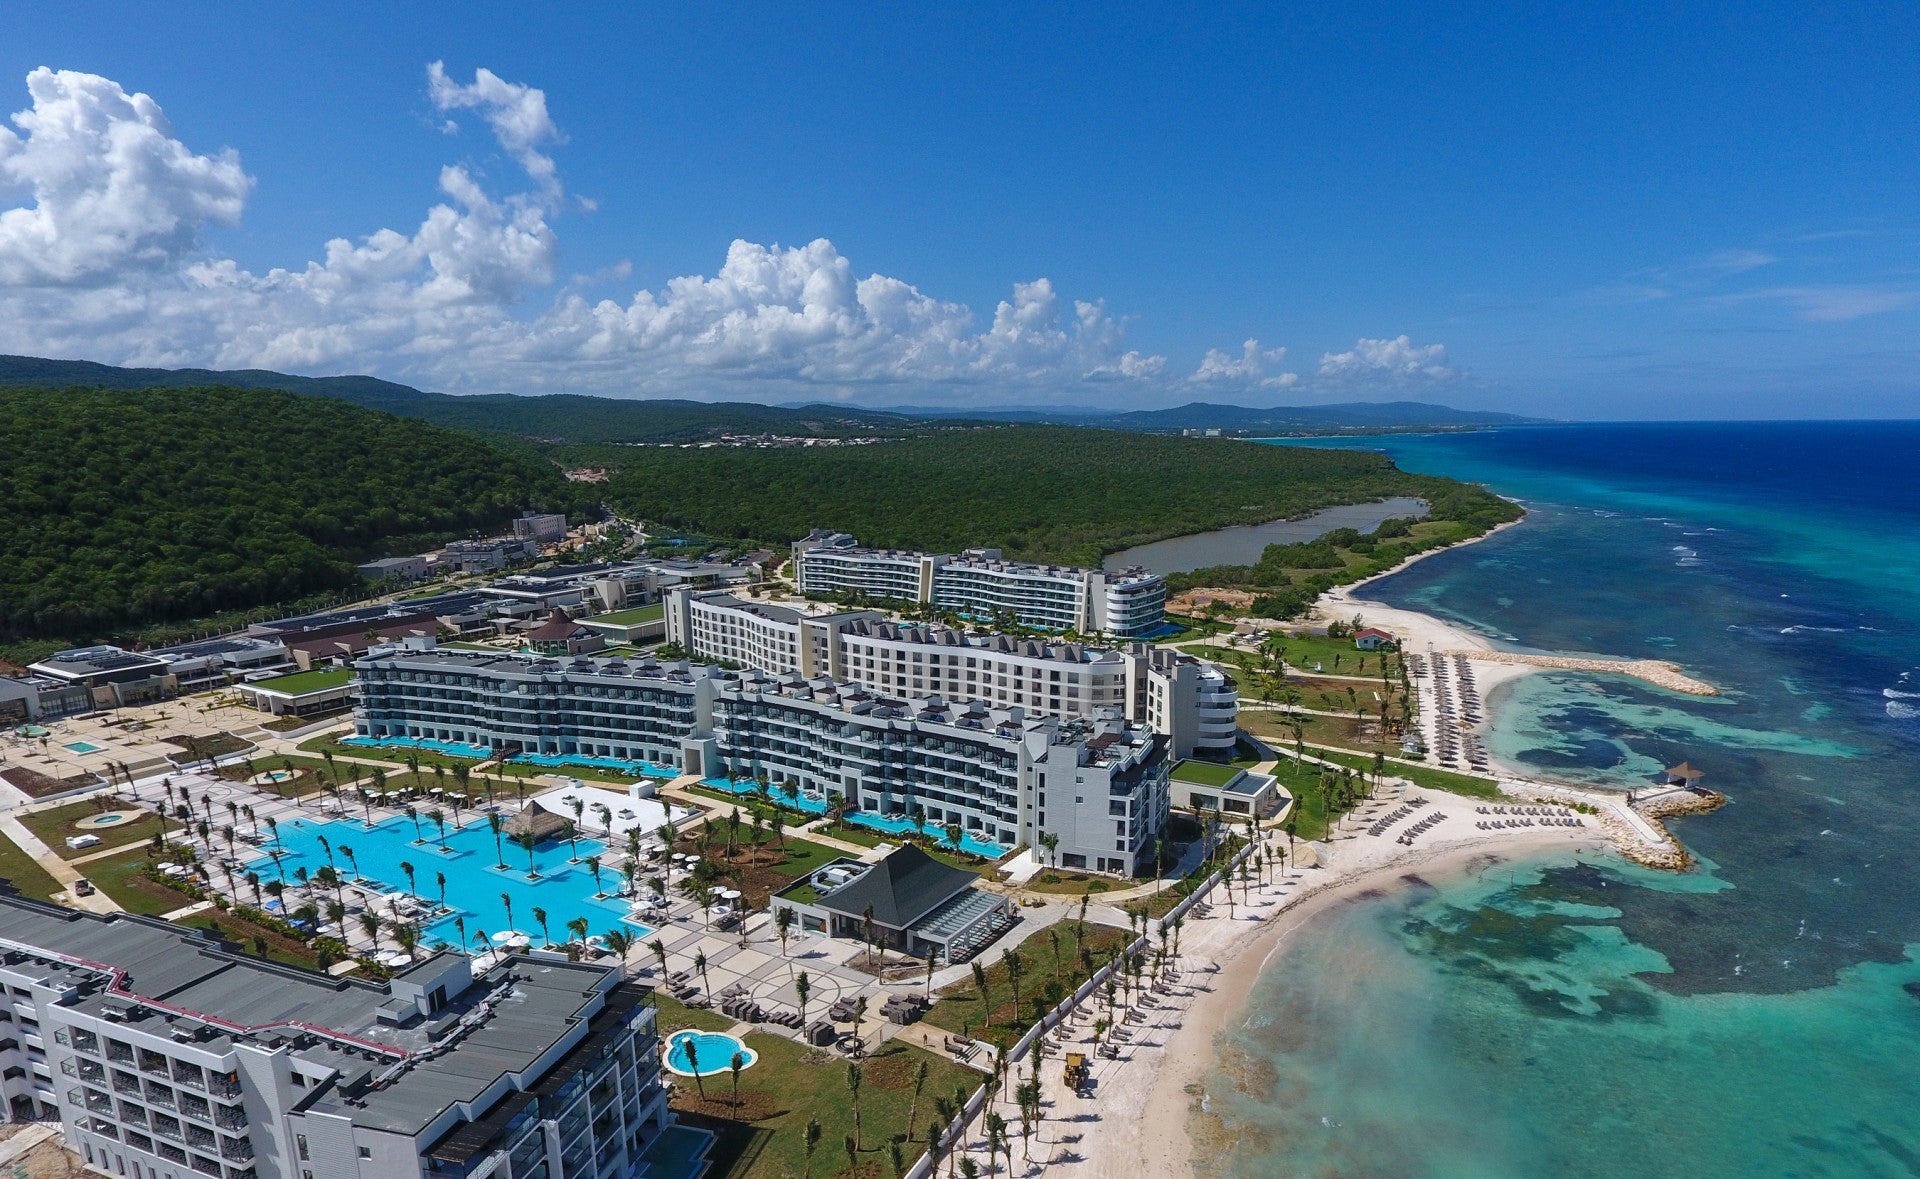 H10 Hotels inaugurates new five-star resort in Jamaica